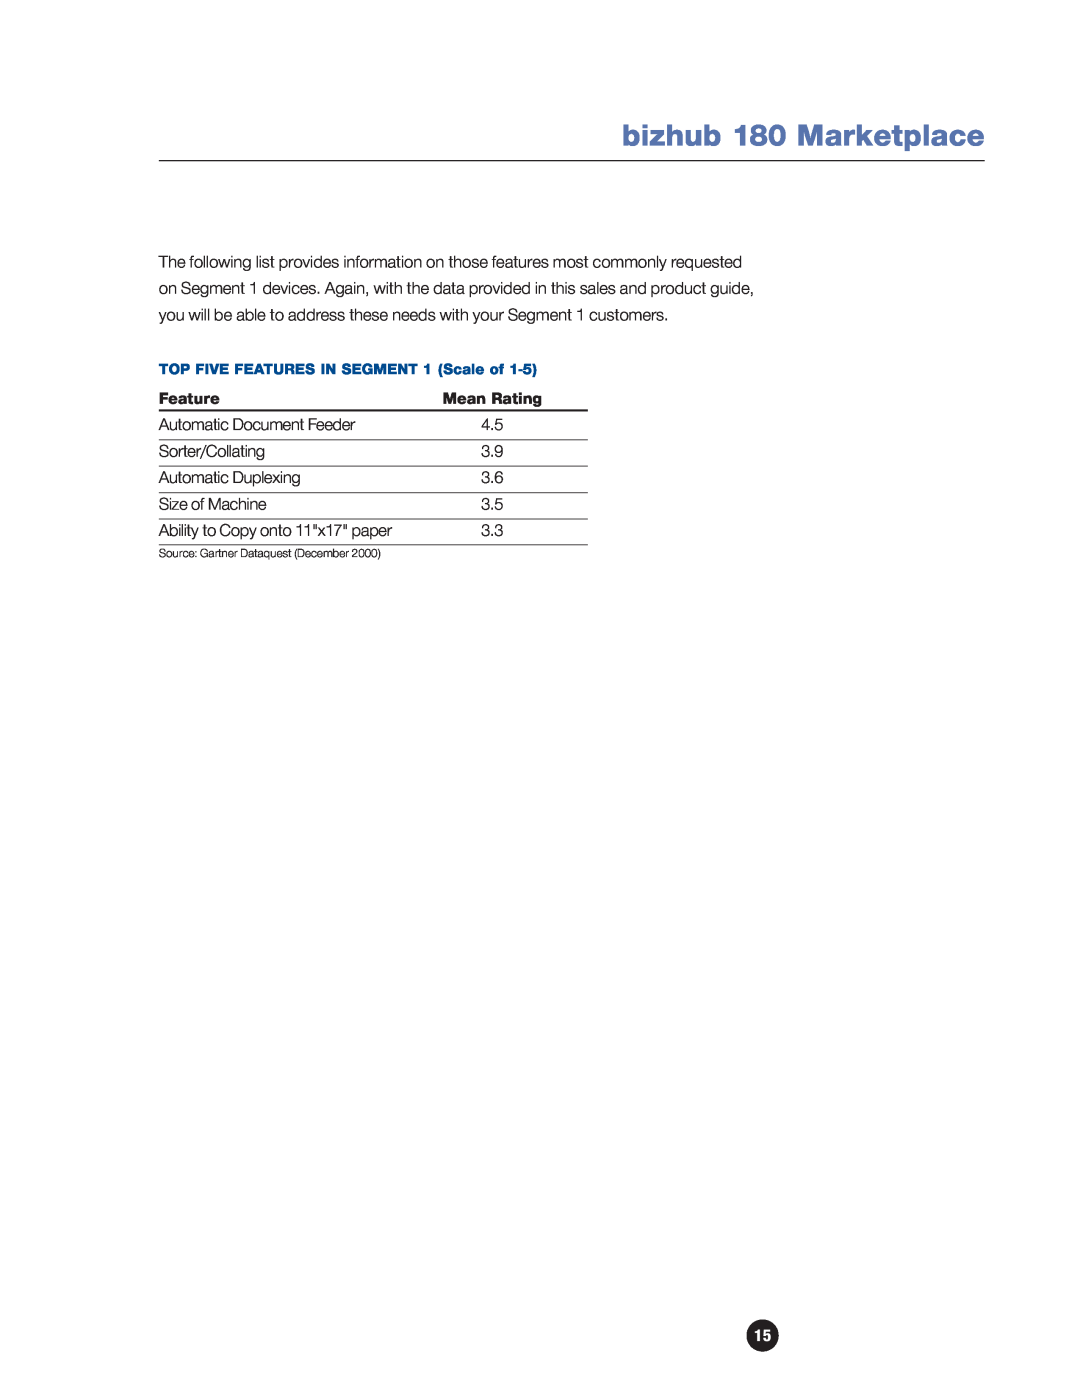 Konica Minolta manual bizhub 180 Marketplace, TOP FIVE FEATURES IN SEGMENT 1 Scale of 